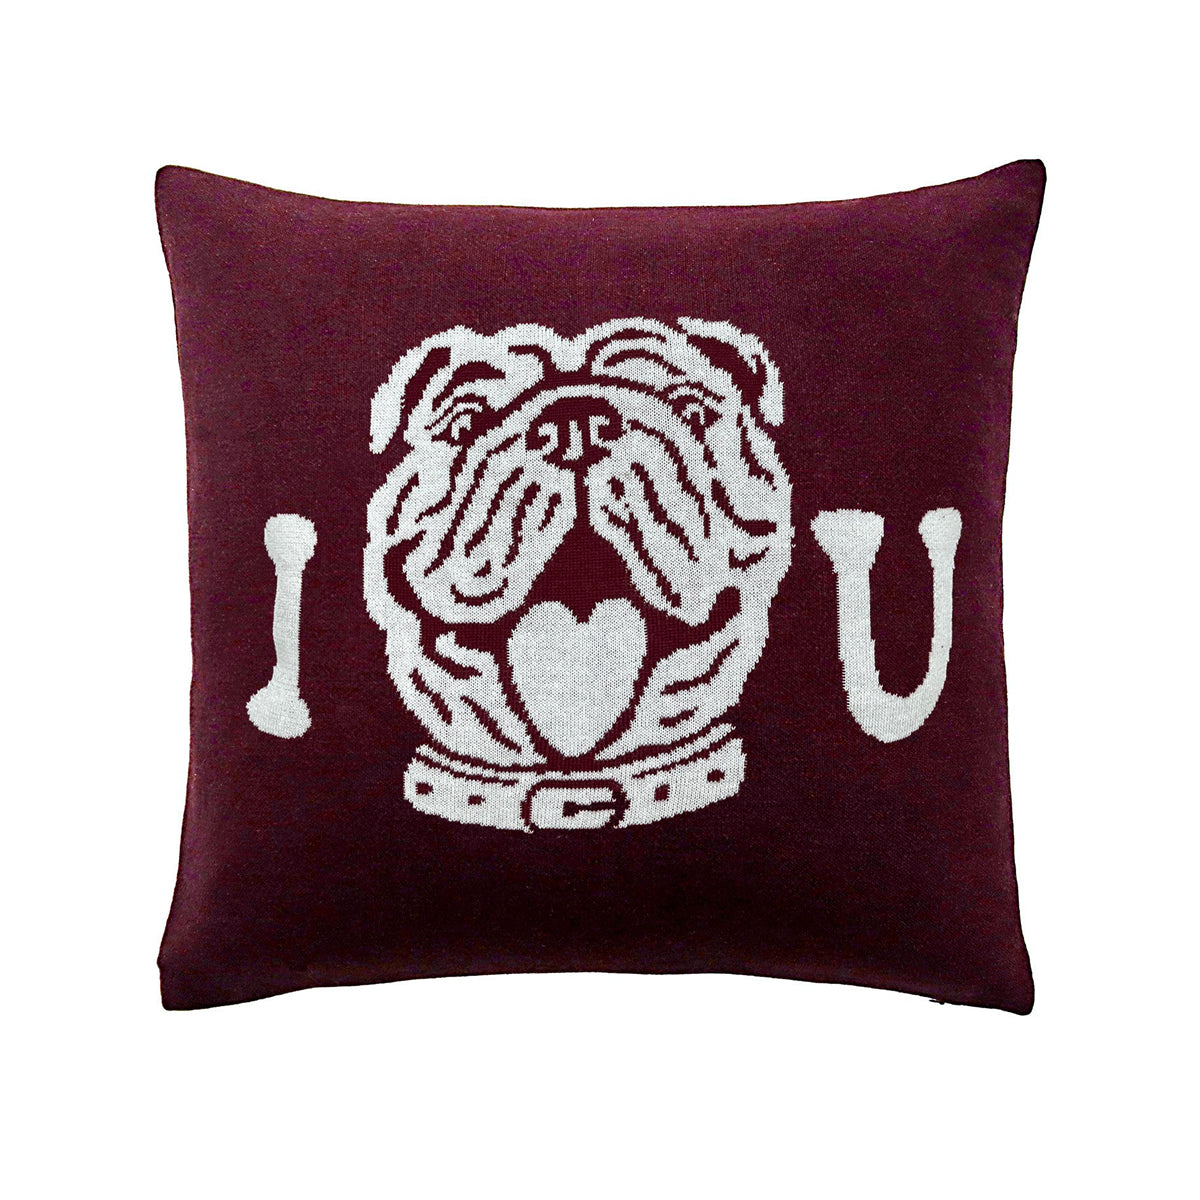 Bulldog Heart Pillow (Maroon)